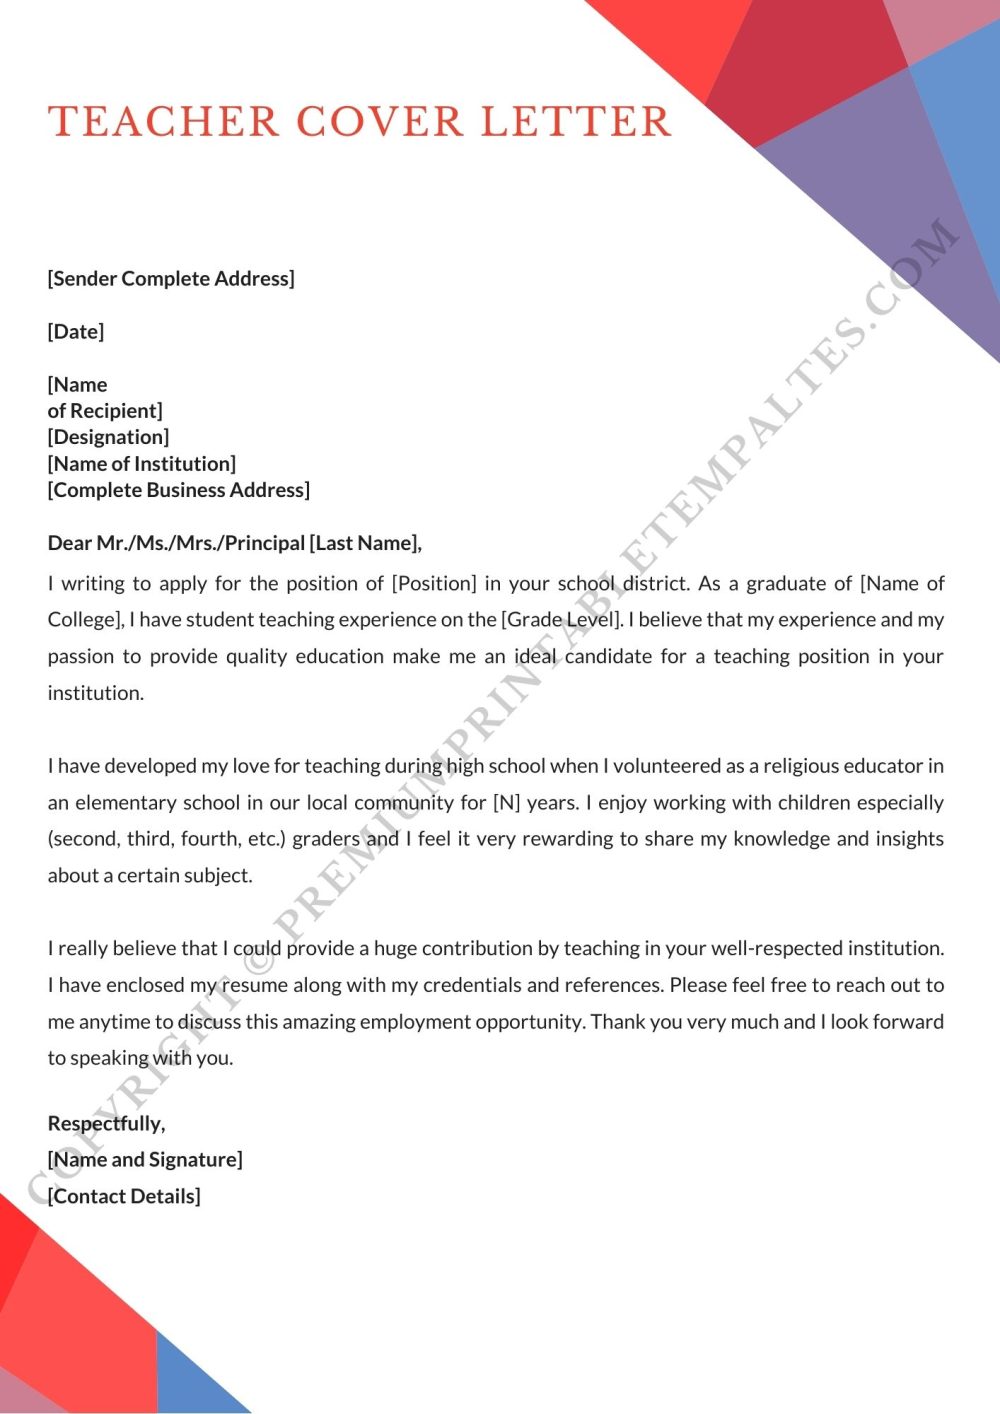 Teacher Cover Letter Download